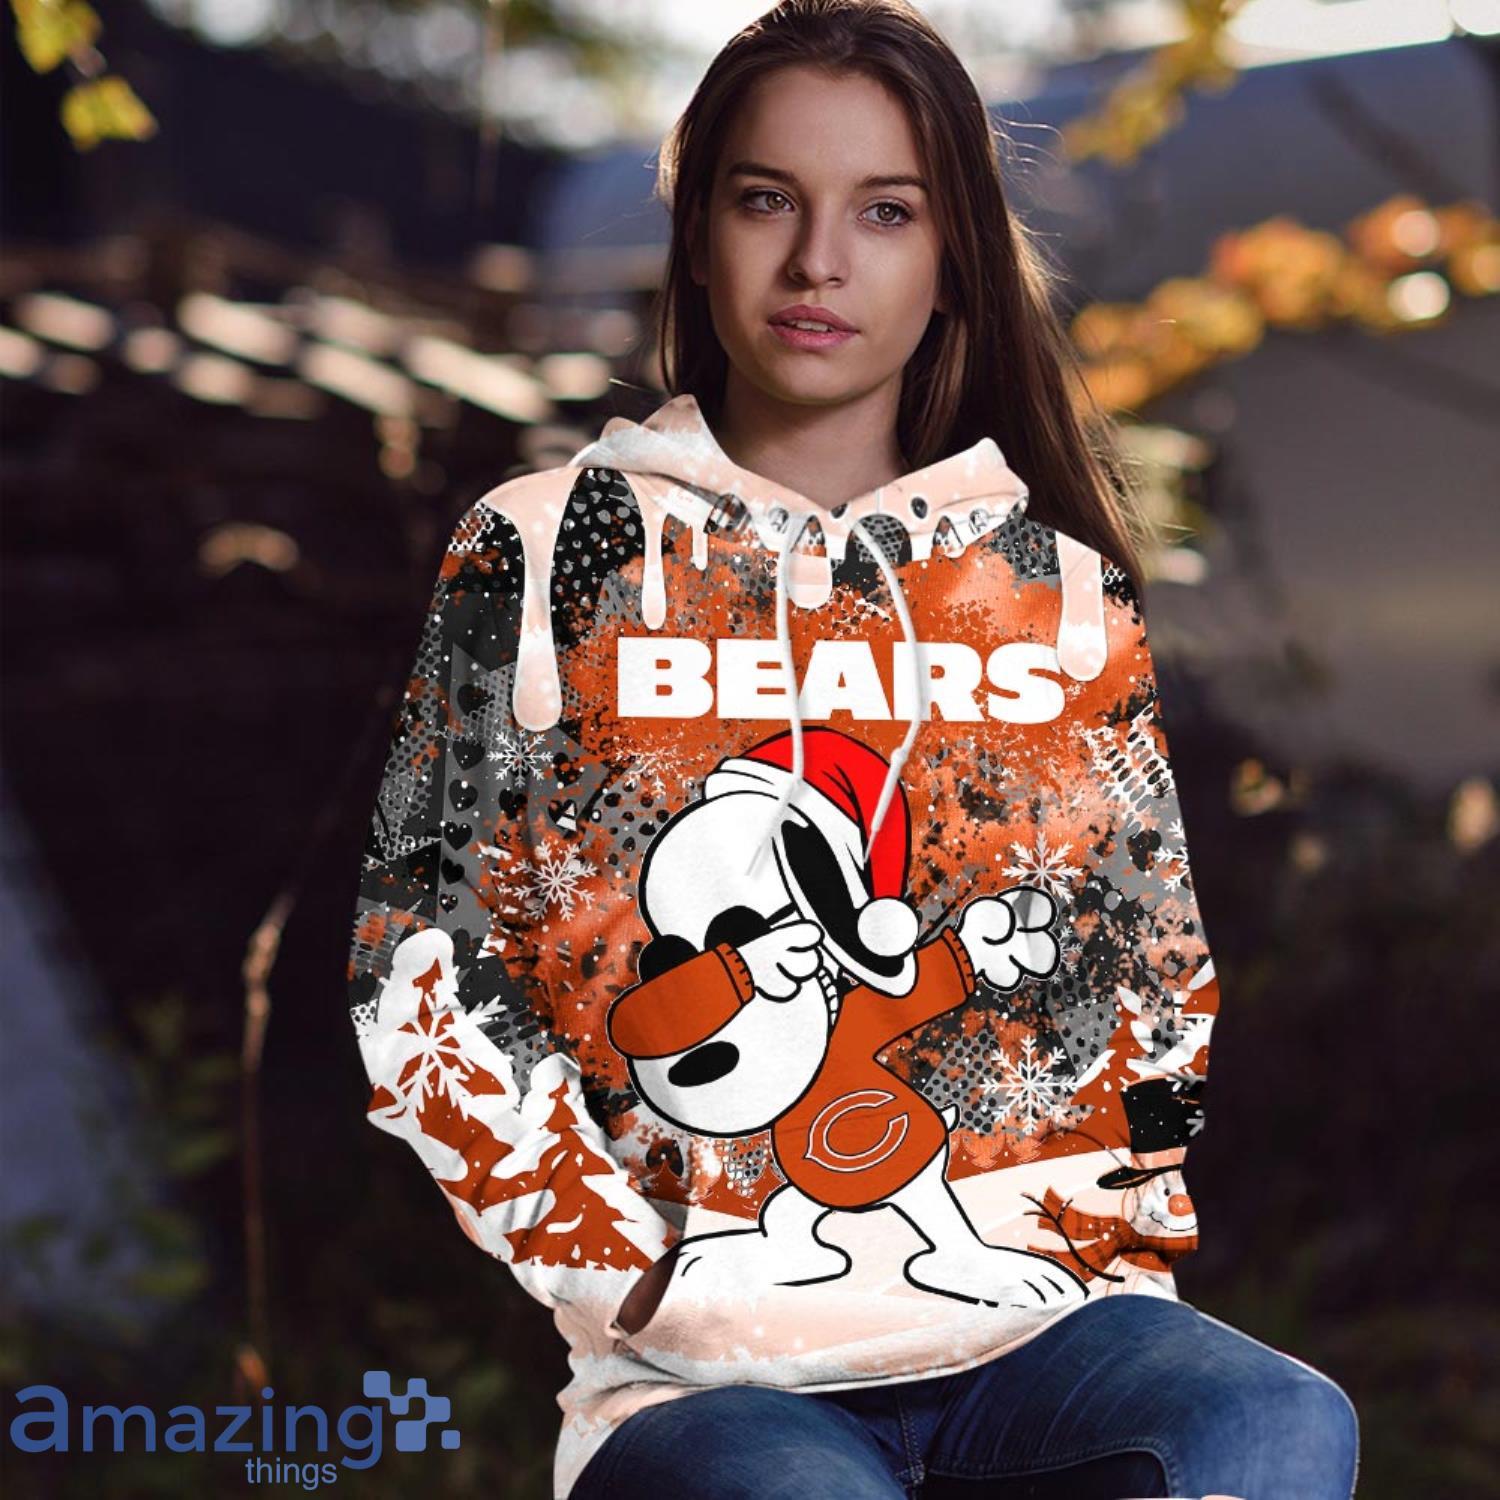 Chicago Bears Hoodie, Bears Sweatshirts, Bears Fleece